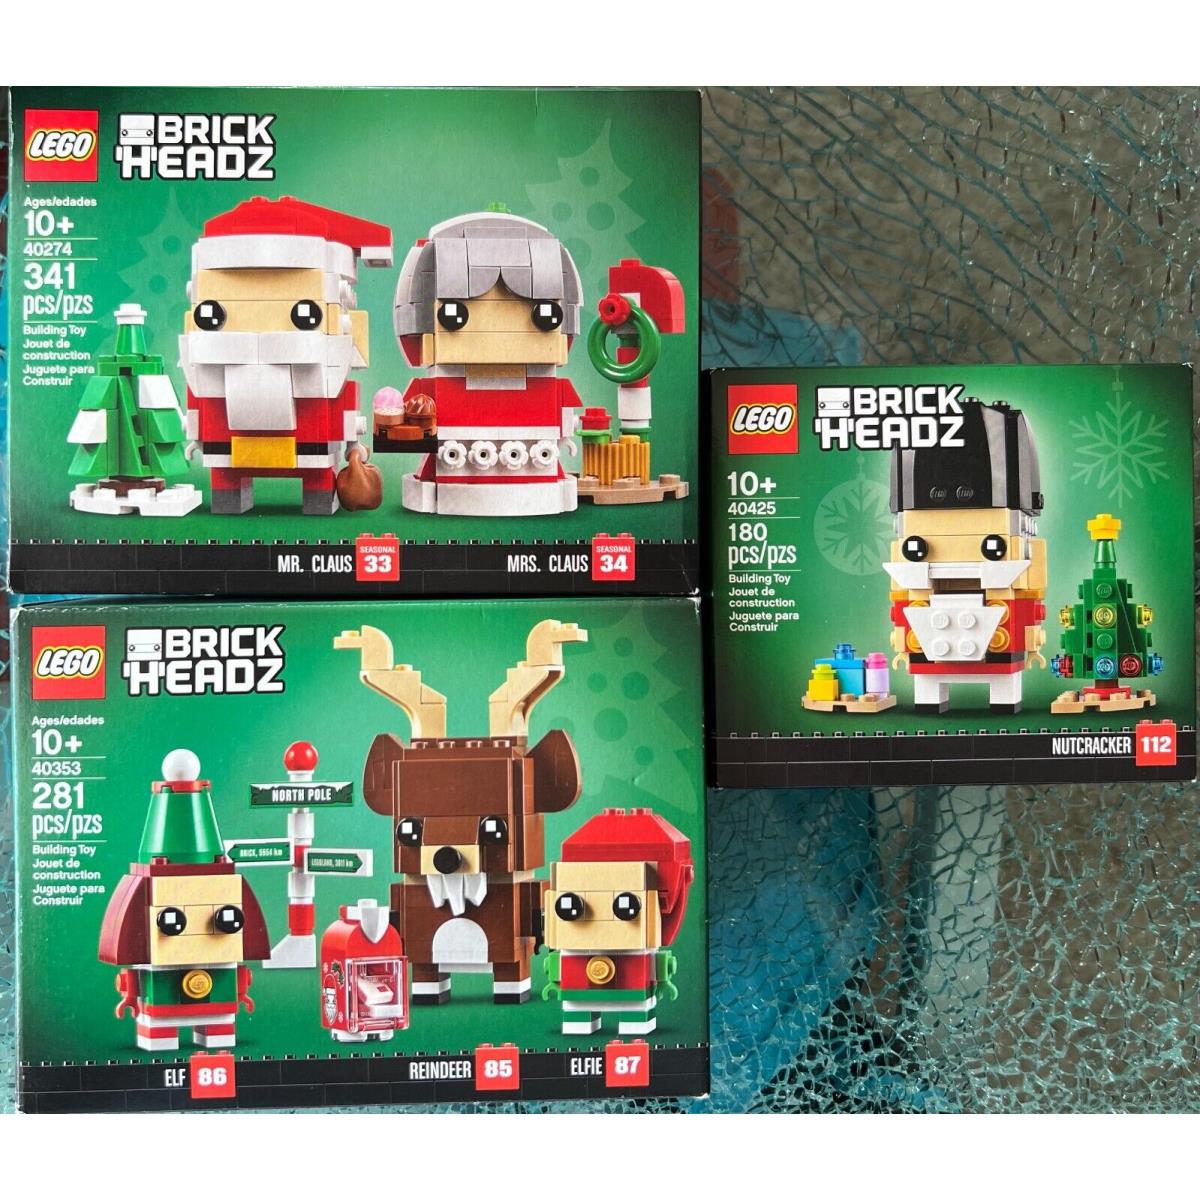 Lego Brickheadz Seasonal Sets:claus 40274 Elfs 40353 Nutcracker 40425